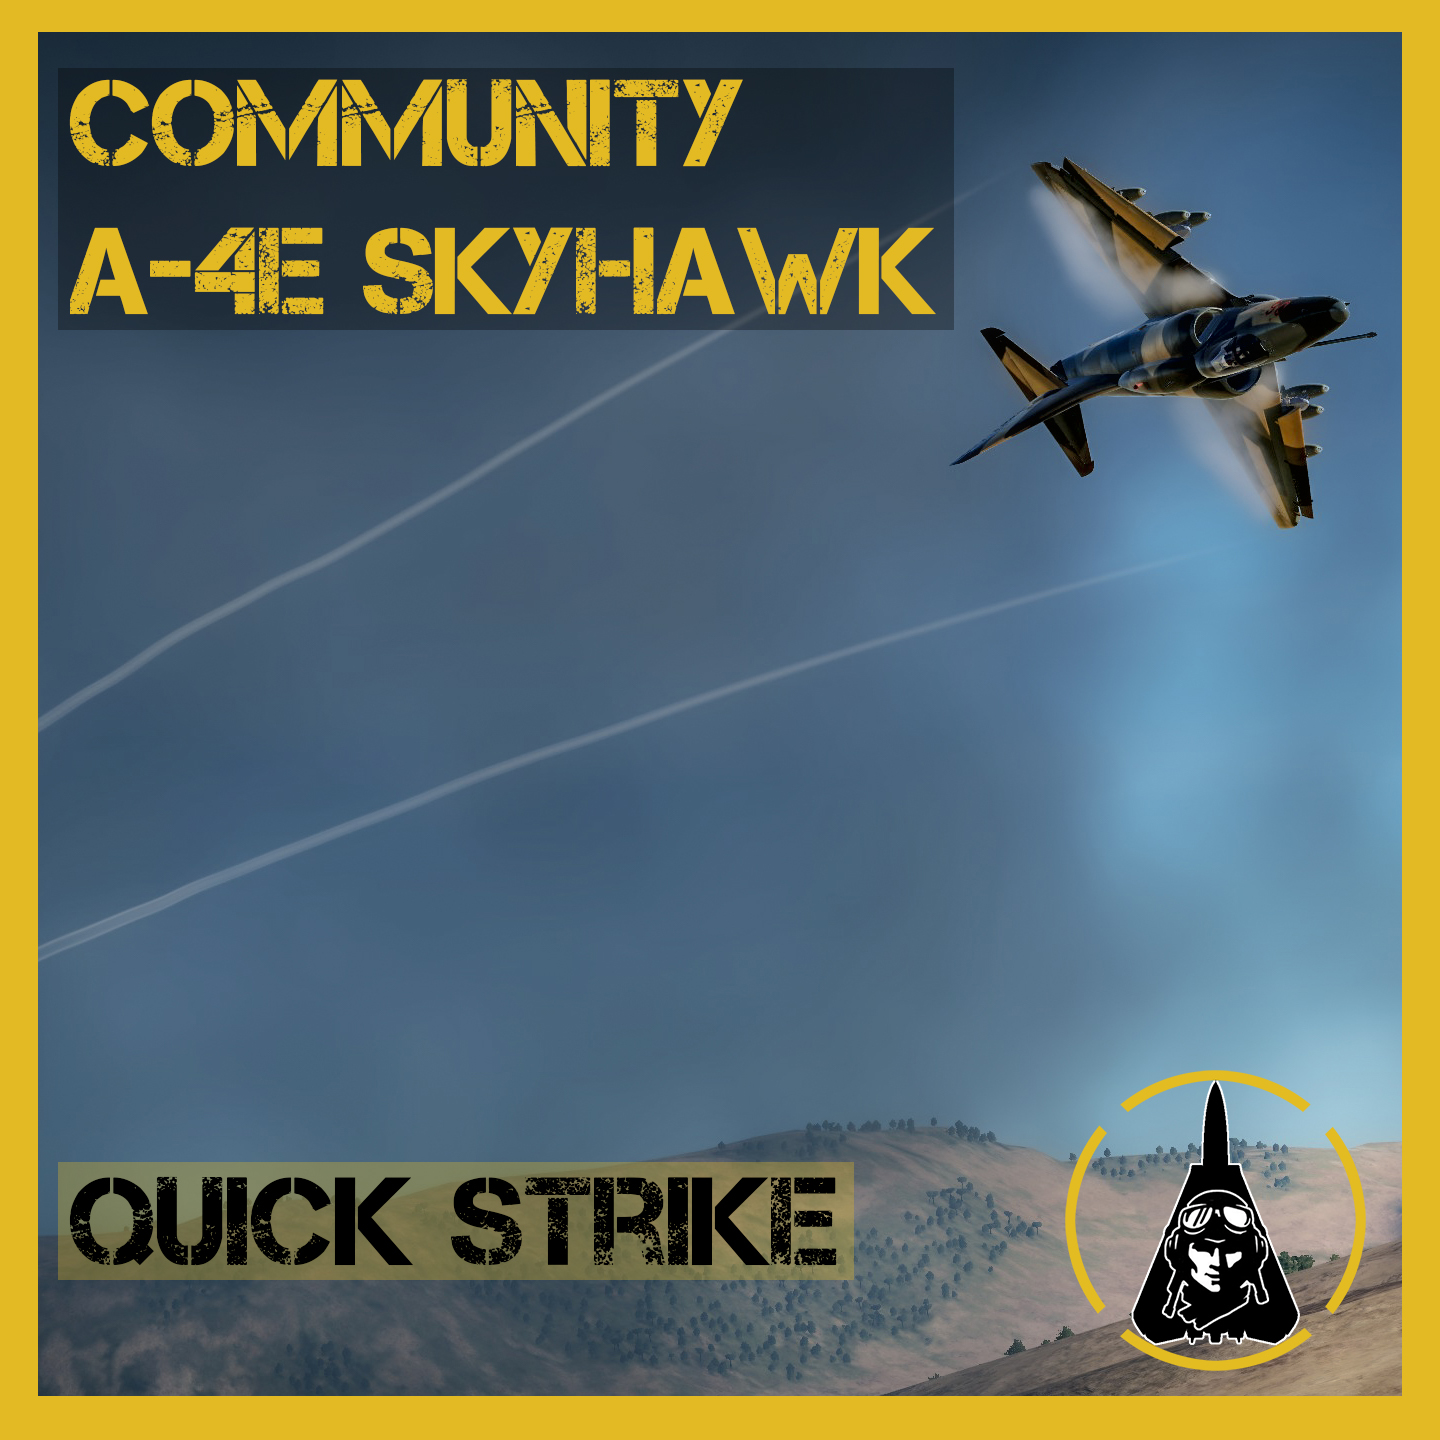 [CO-OP] Community A-4E Mod Quick Strike Mission by Sport